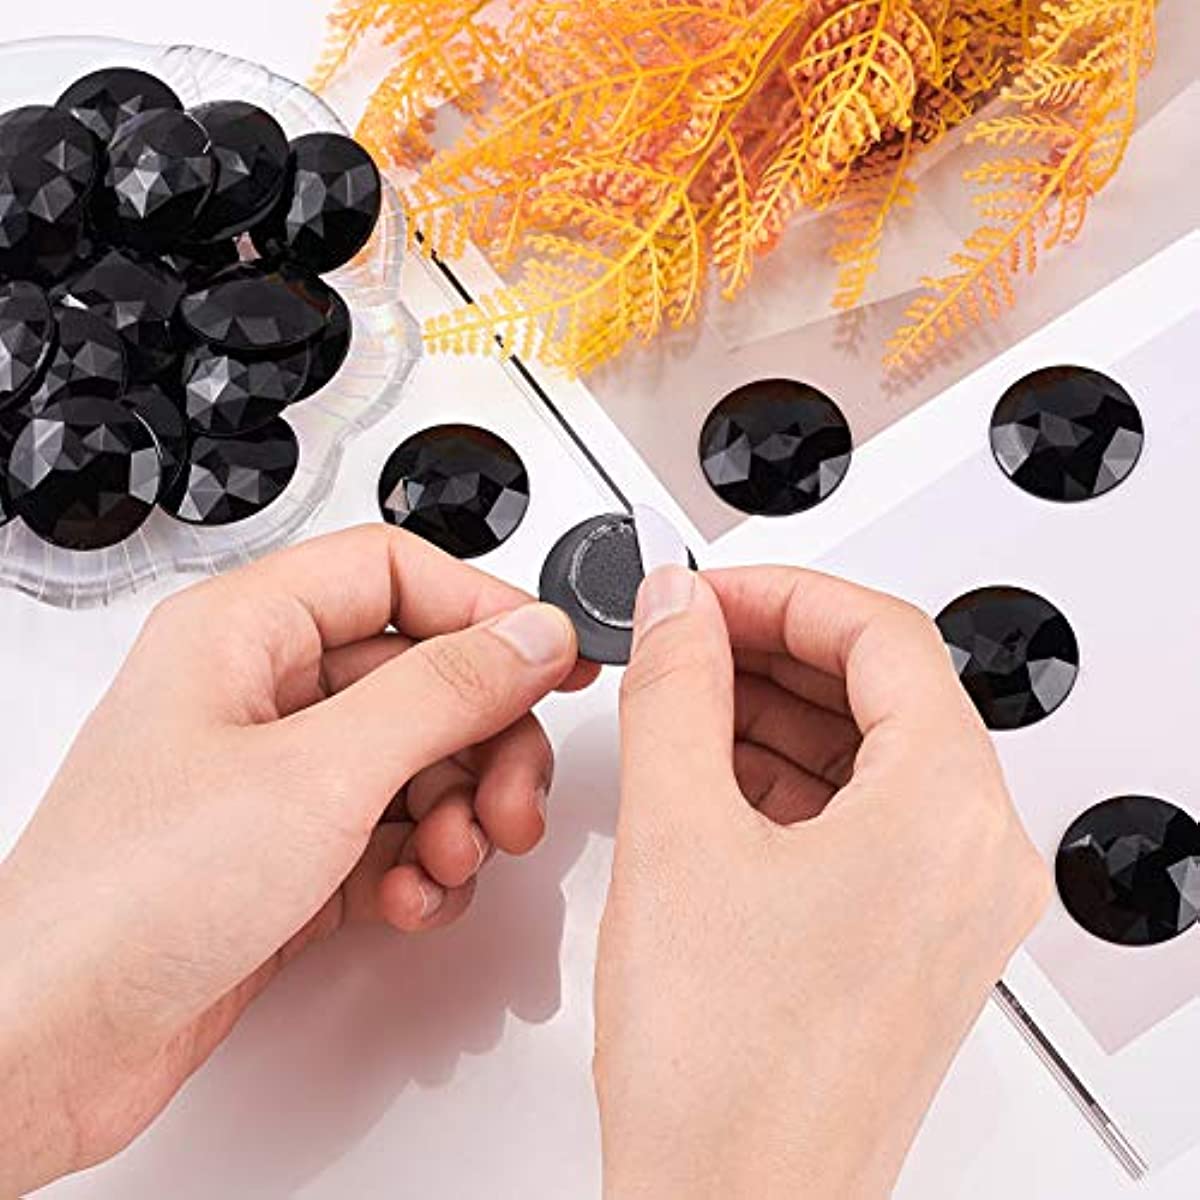 50Pcs 30mm Flat Back Round Acrylic Rhinestone Self-Adhesive Plastic Circle  Gems Stick On Jewels(Black) for Costume Making Cosplay Jewels Invitation